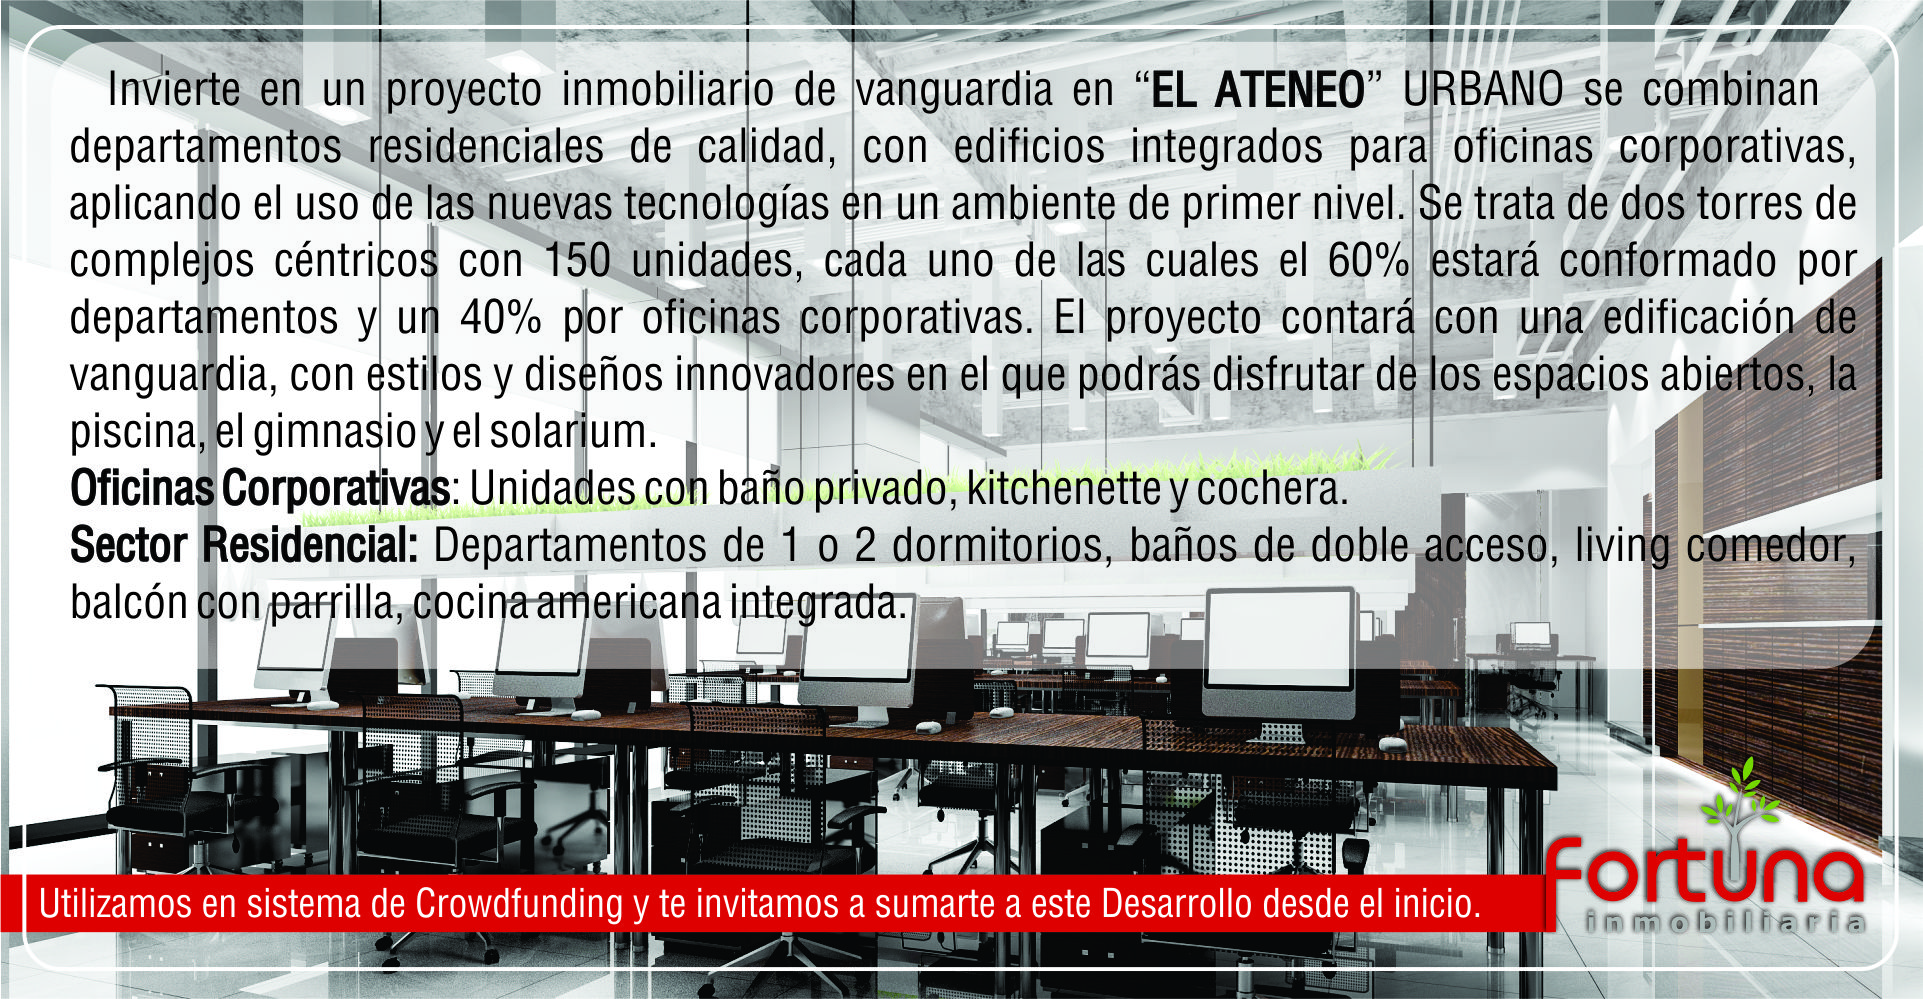 ElAteneo-Paraguay-Inversiones-Crowdfunding-FortunaInmobiliaria